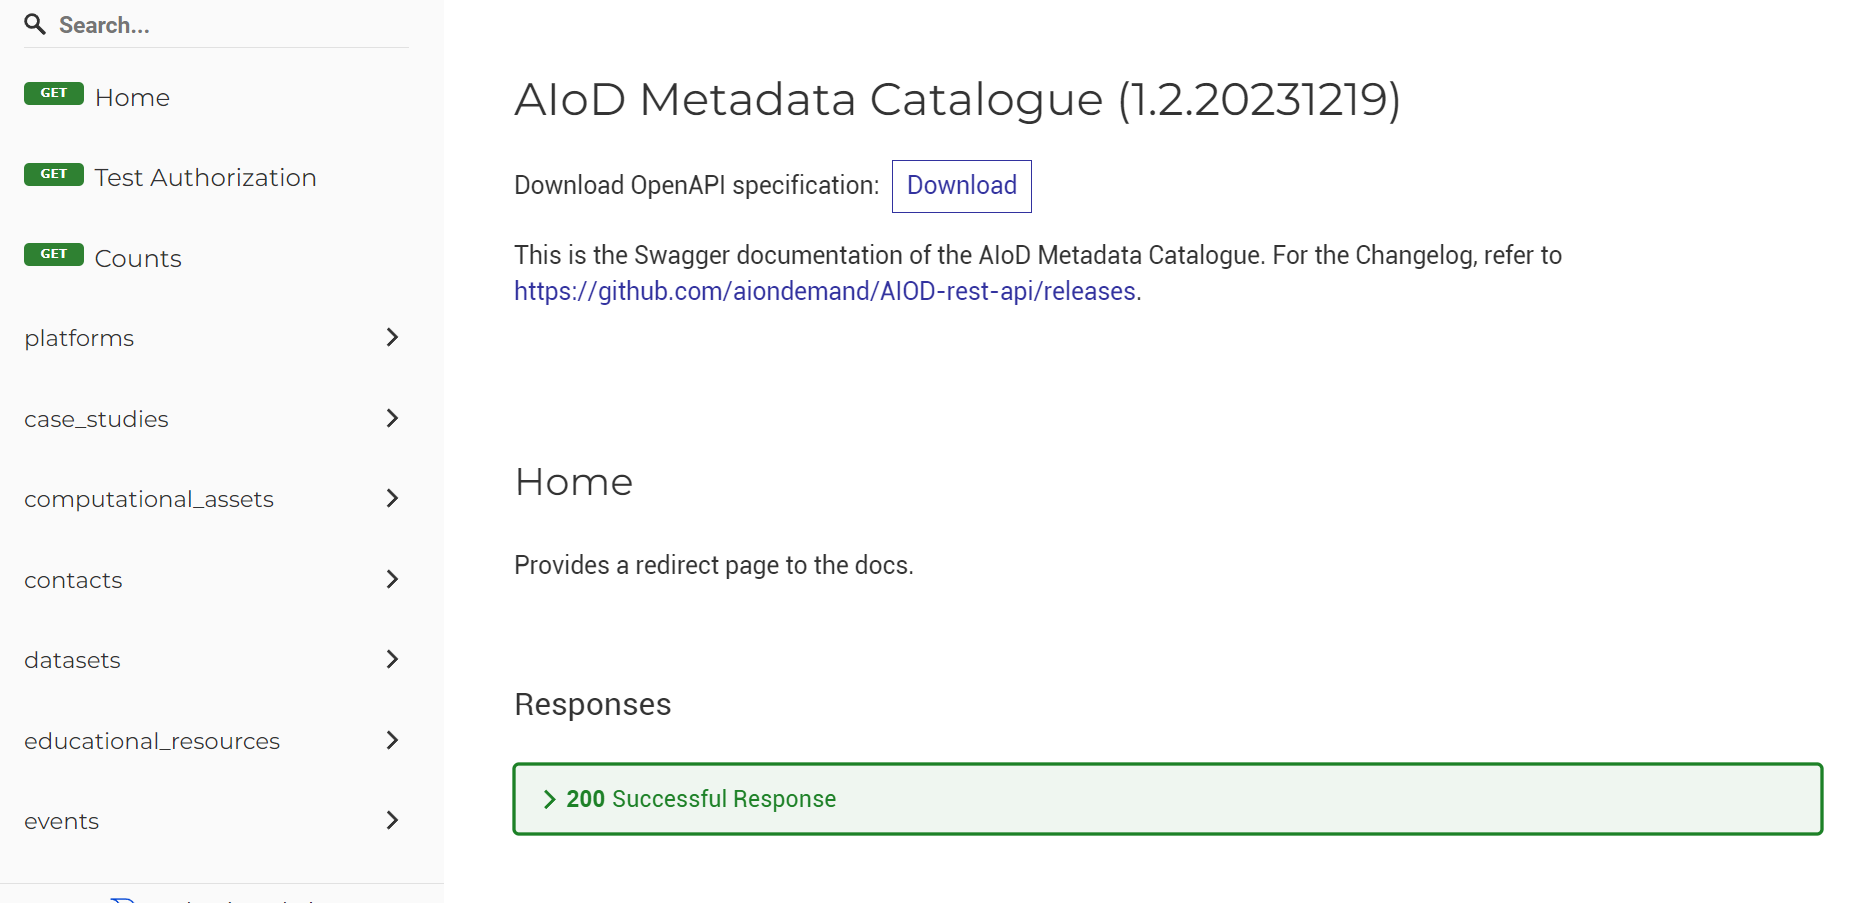 AIoD Metadata Catalogue